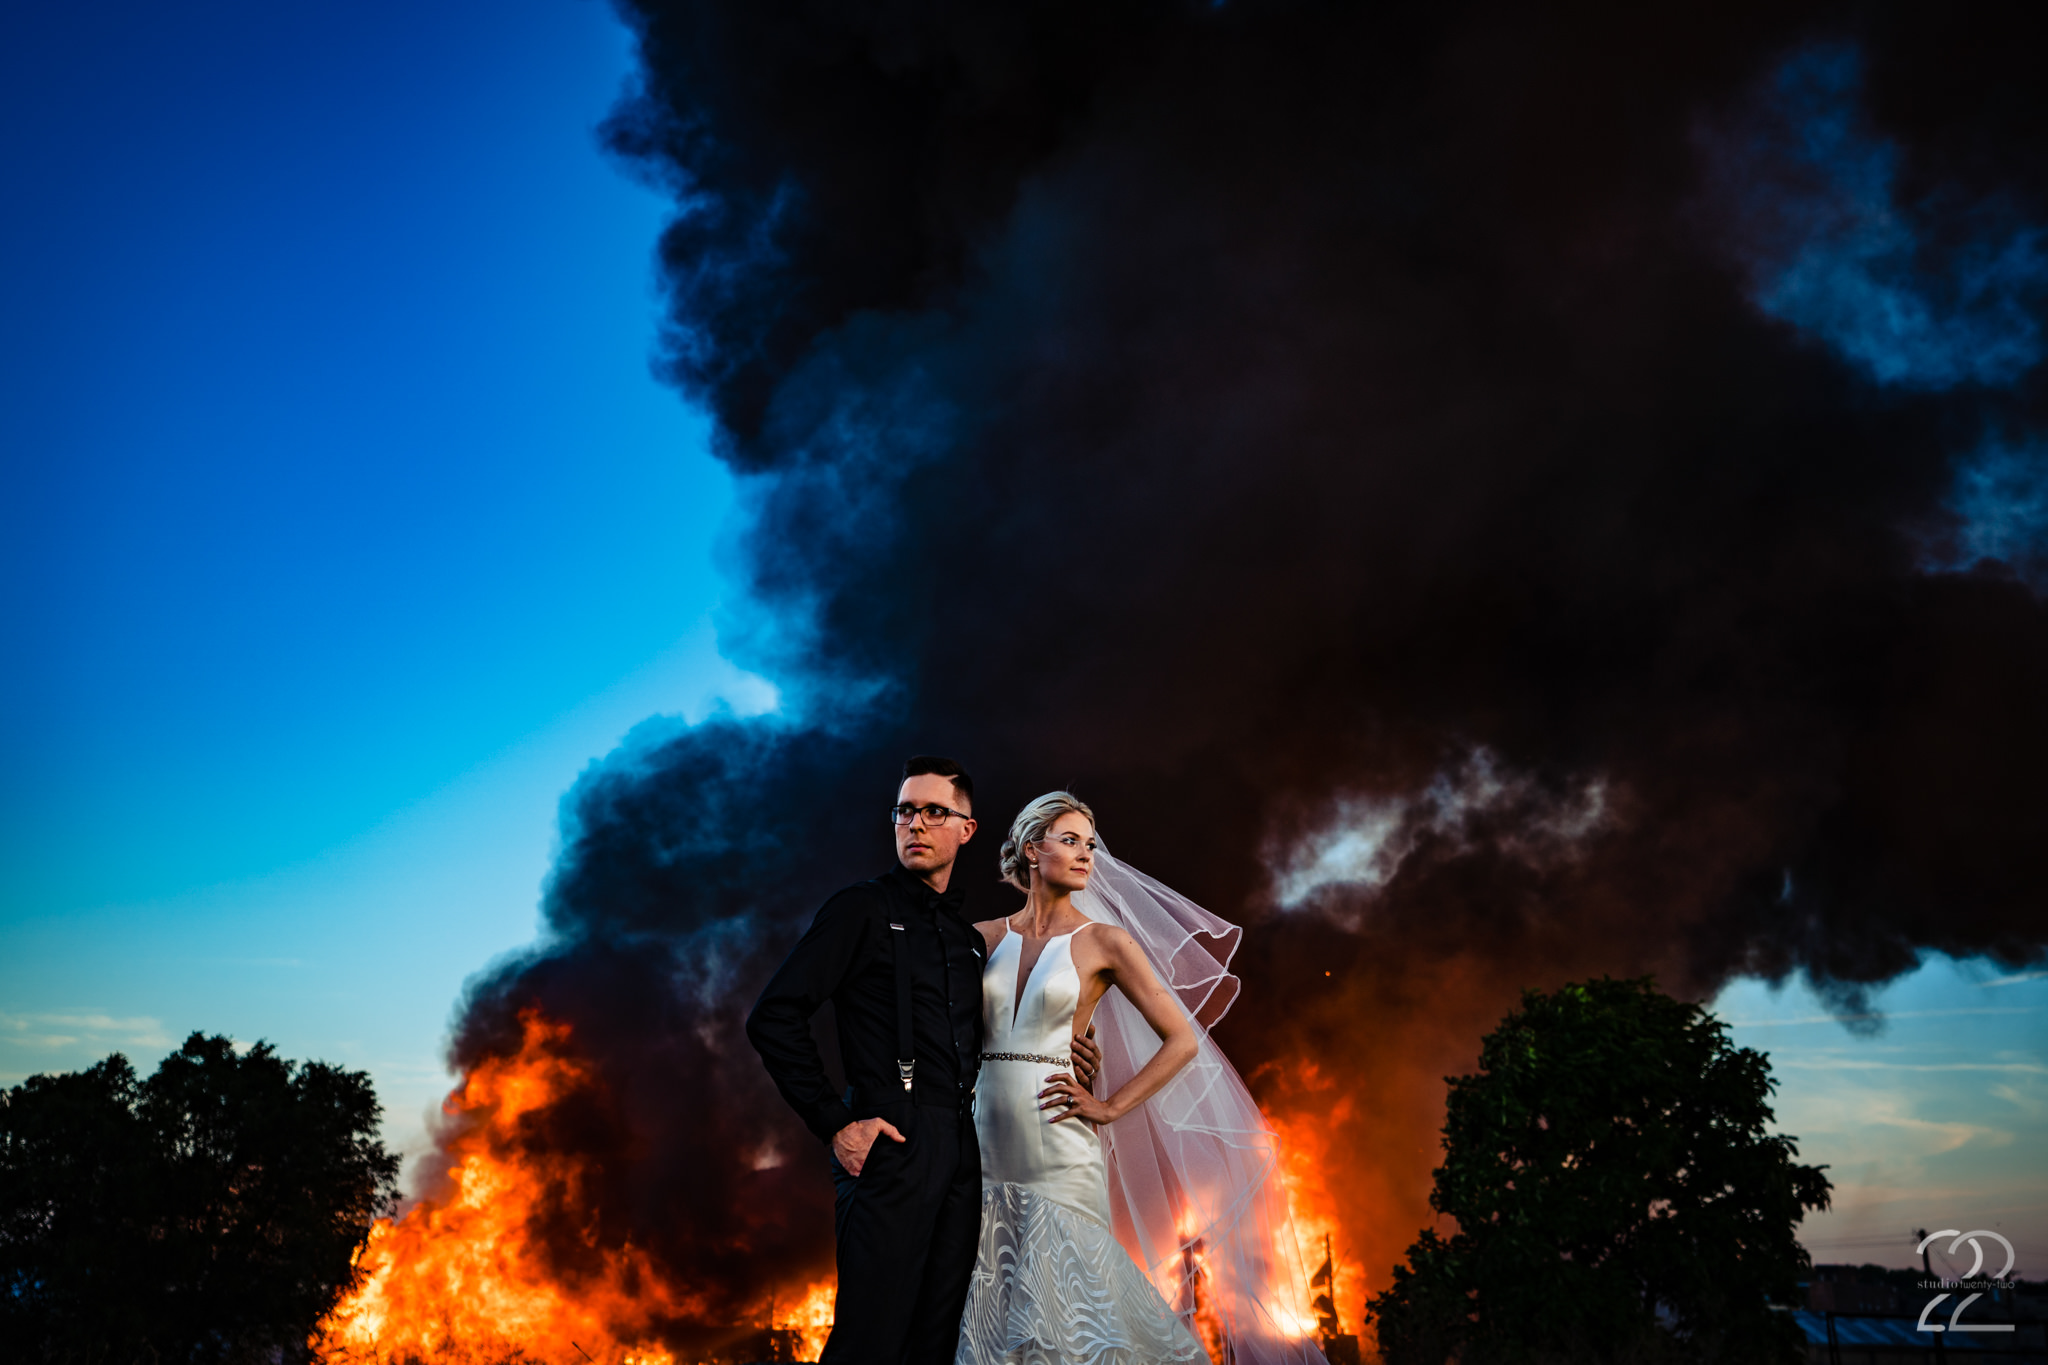 Studio 22 Photography - Megan Allen - Viral Fire Wedding Photo